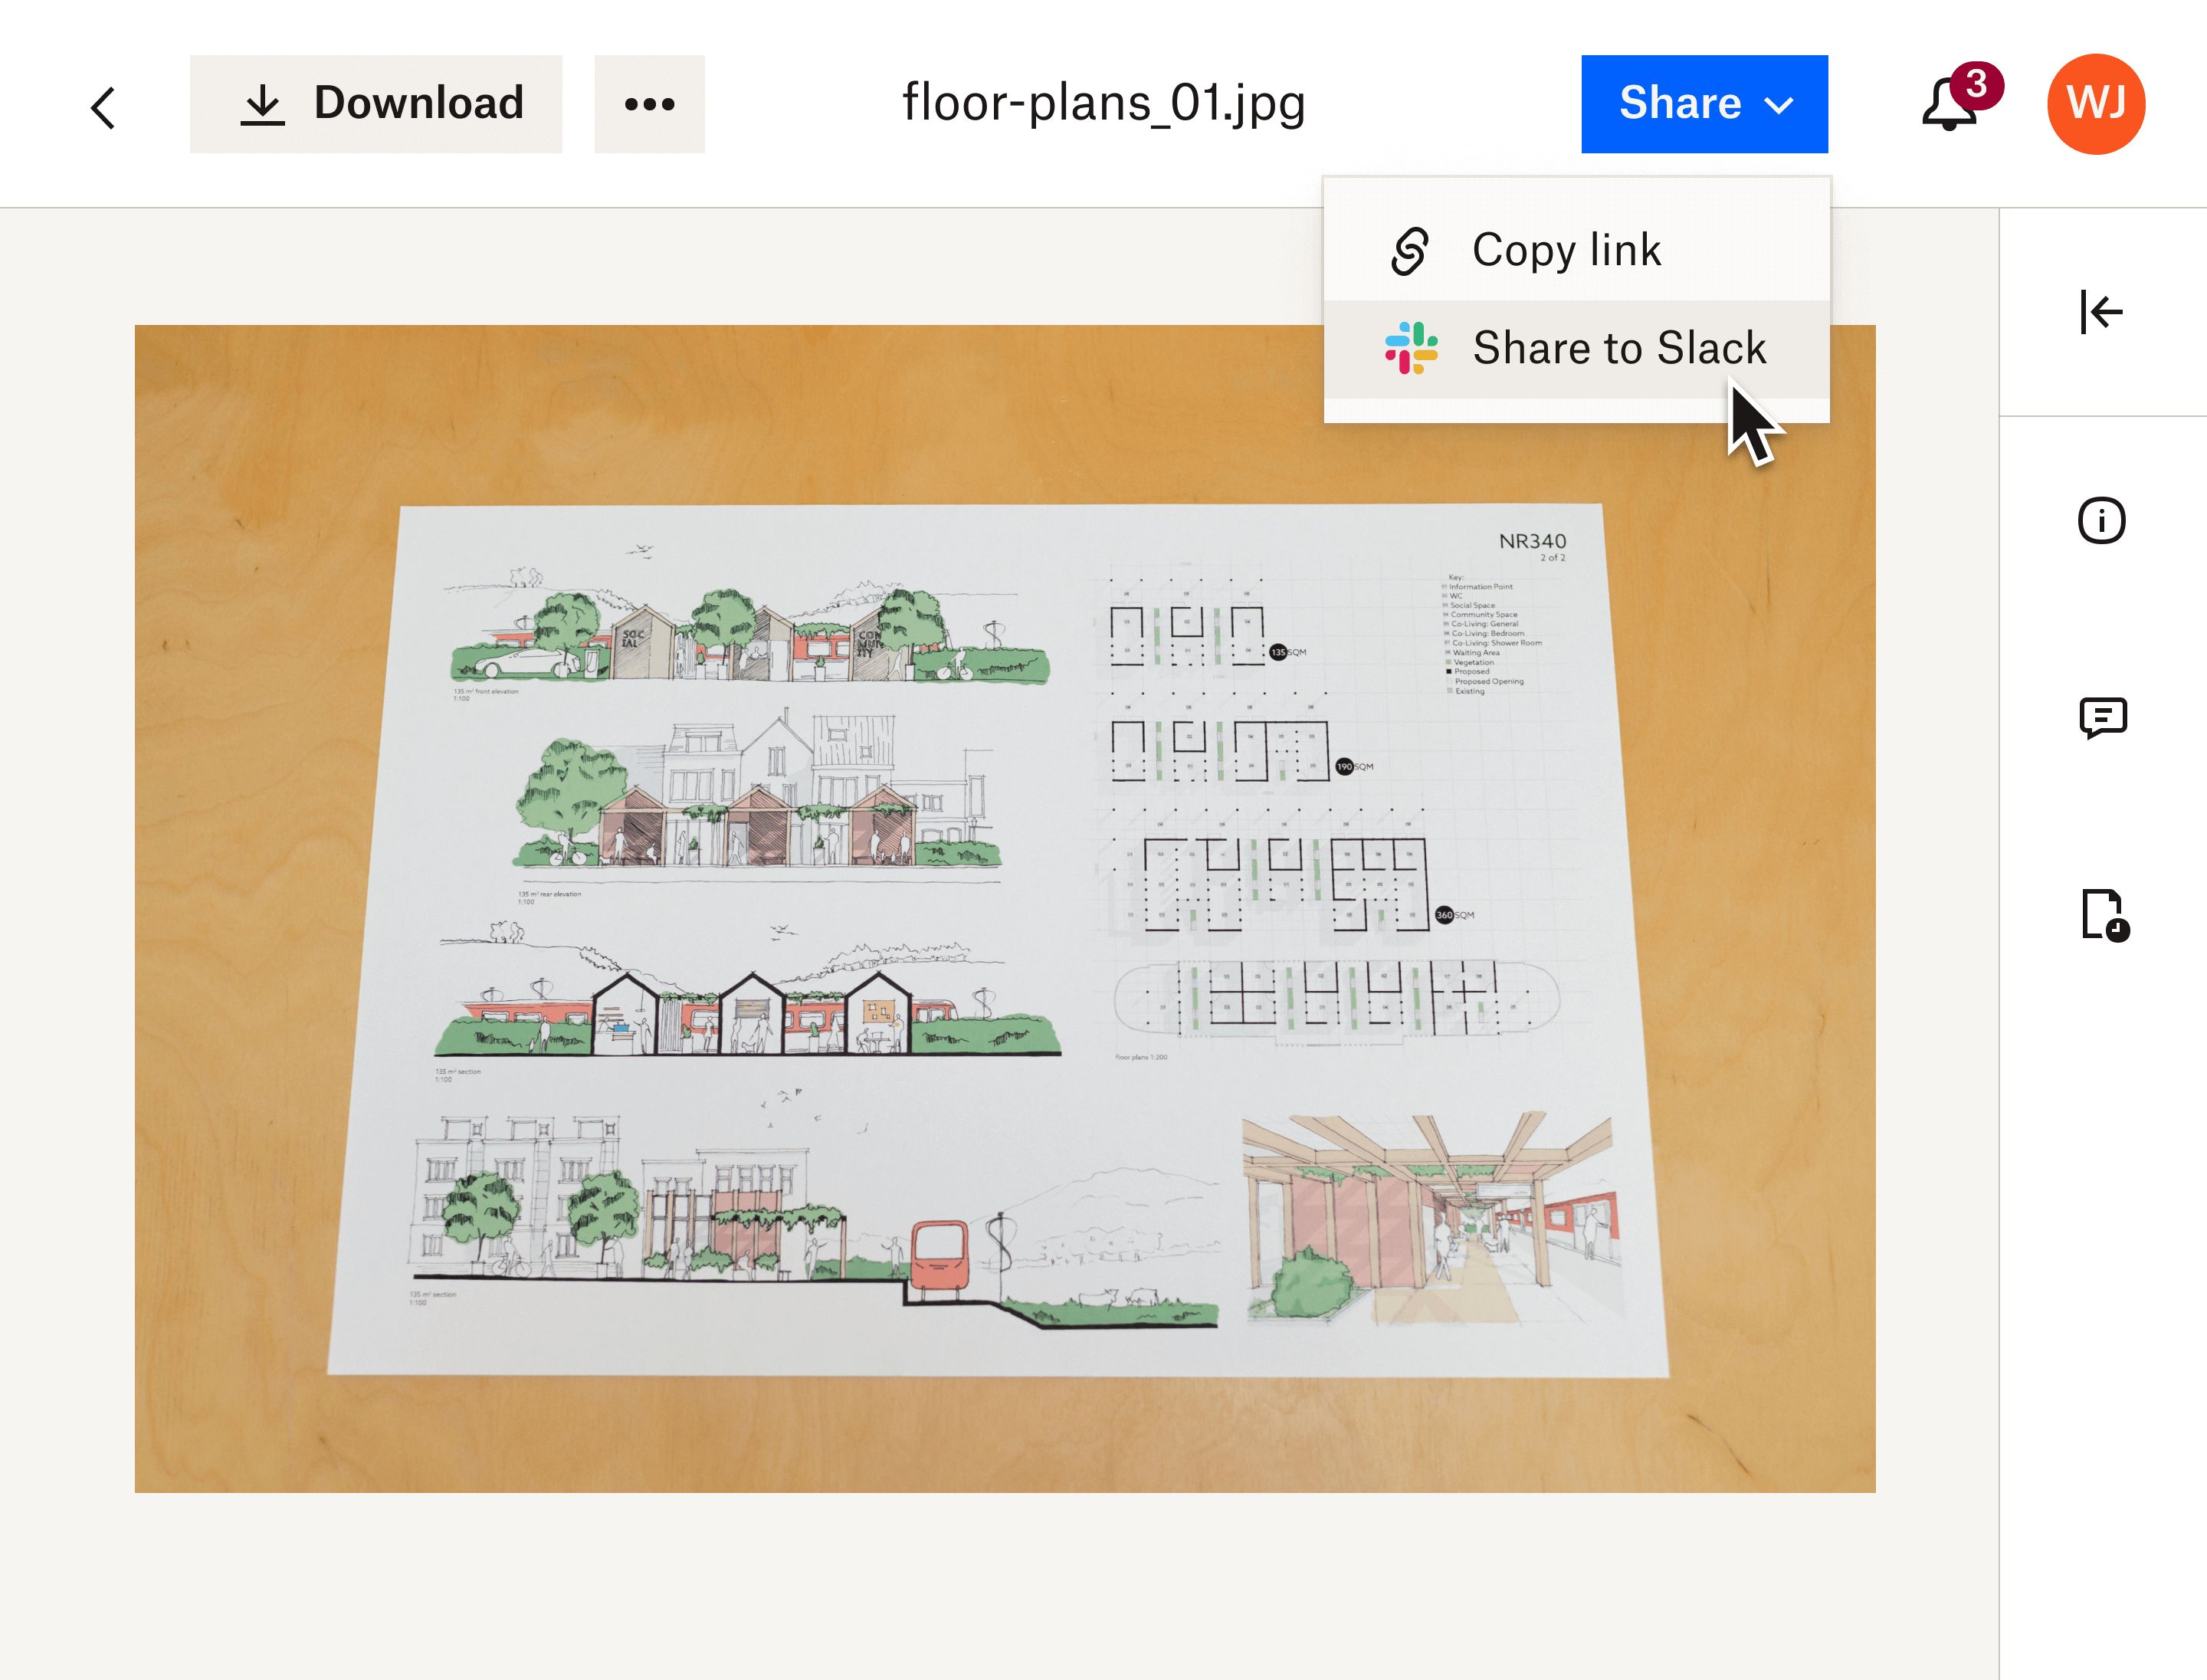 A floor-plan image file being shared on Slack via Dropbox